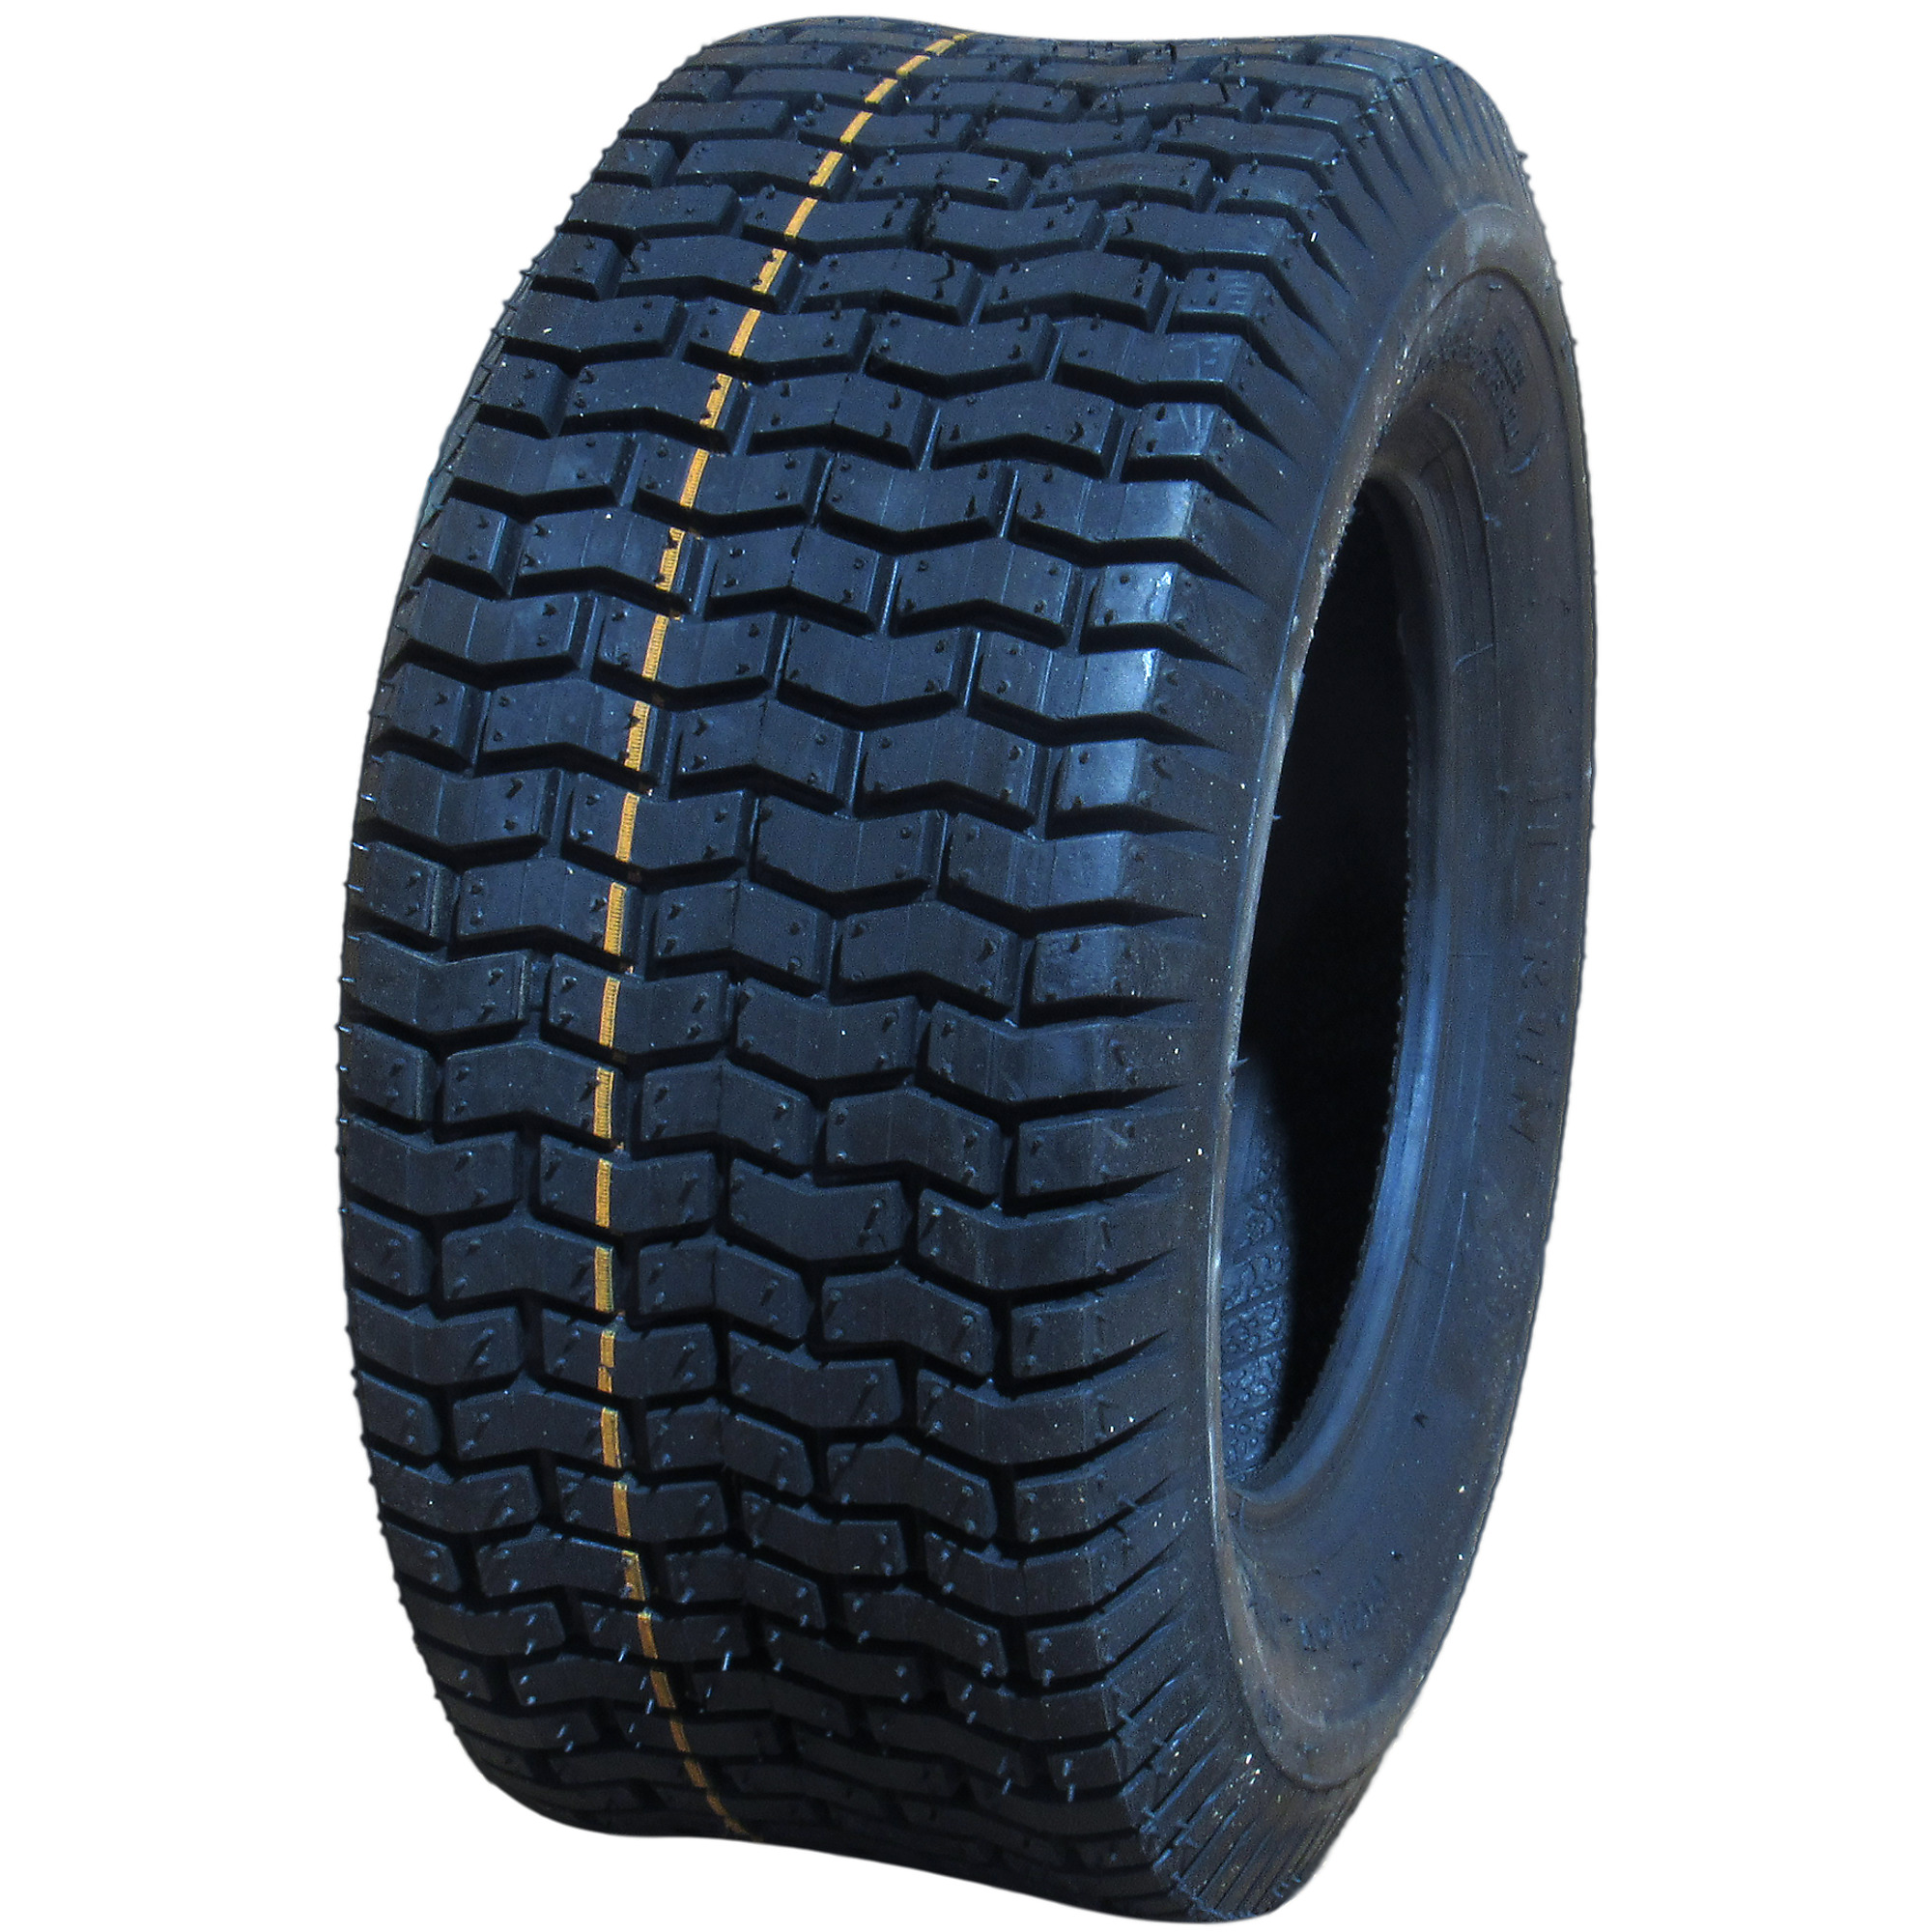 HI-RUN, Lawn Garden Tire, SU12 Turf II, Tire Size 16X6.50-8 Load Range Rating A, Model WD1100